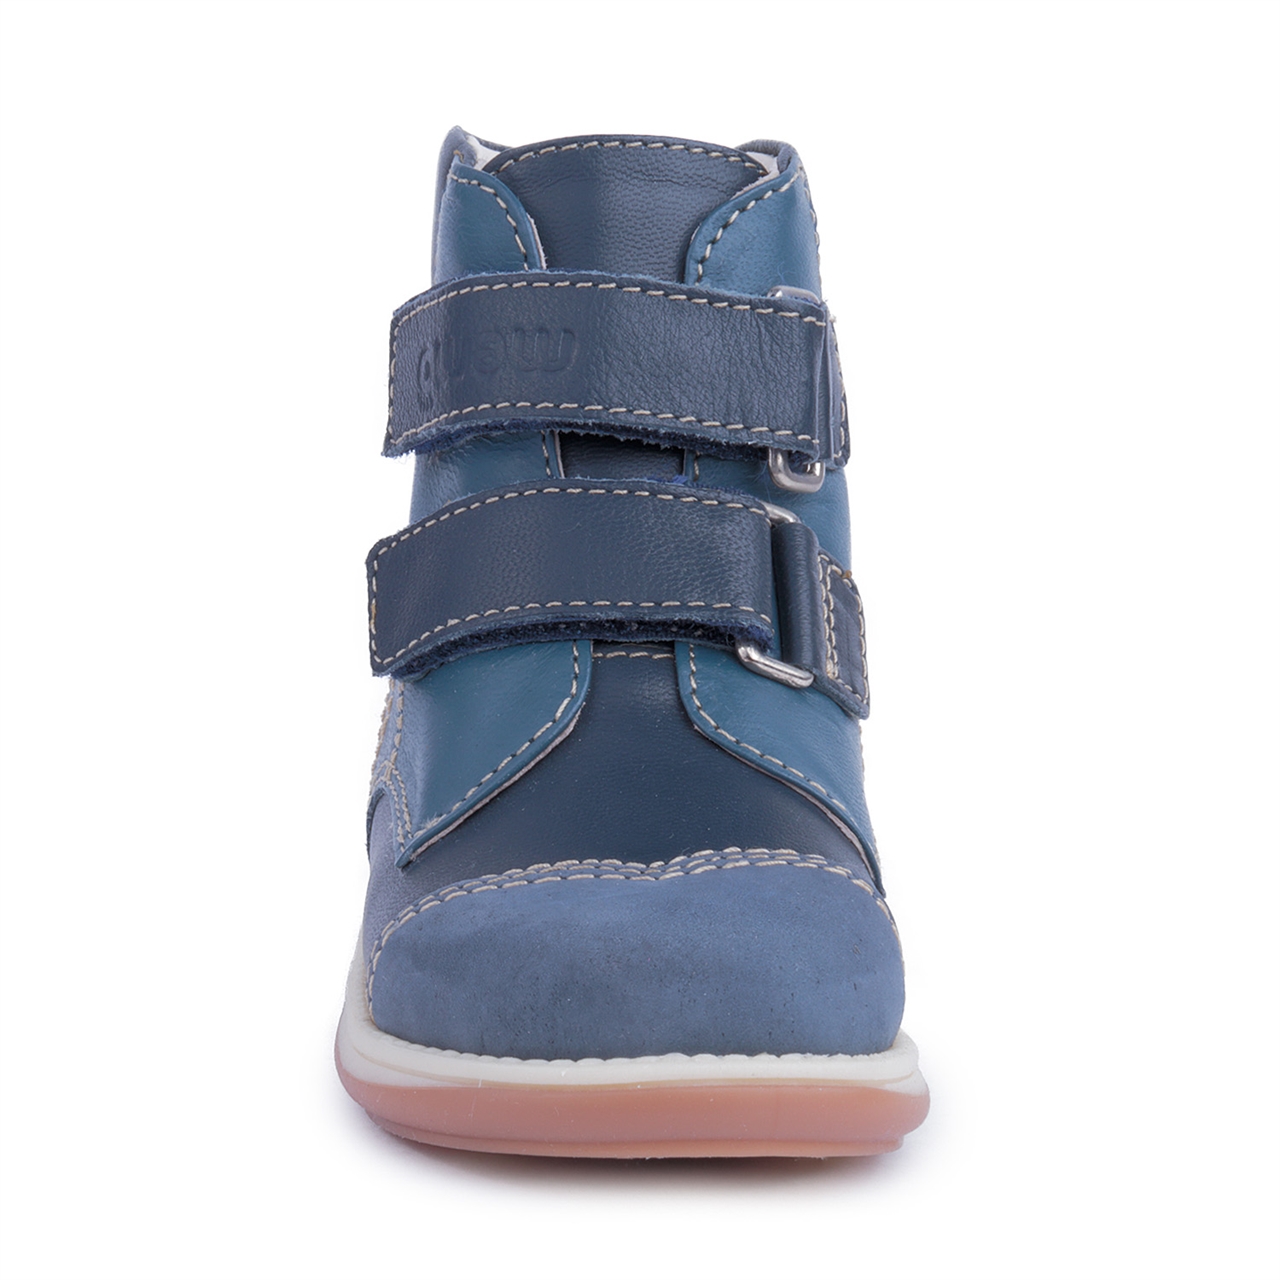 Toddler/Little Kid Memo KARAT Boys' Corrective Orthopedic Ankle Support Boots